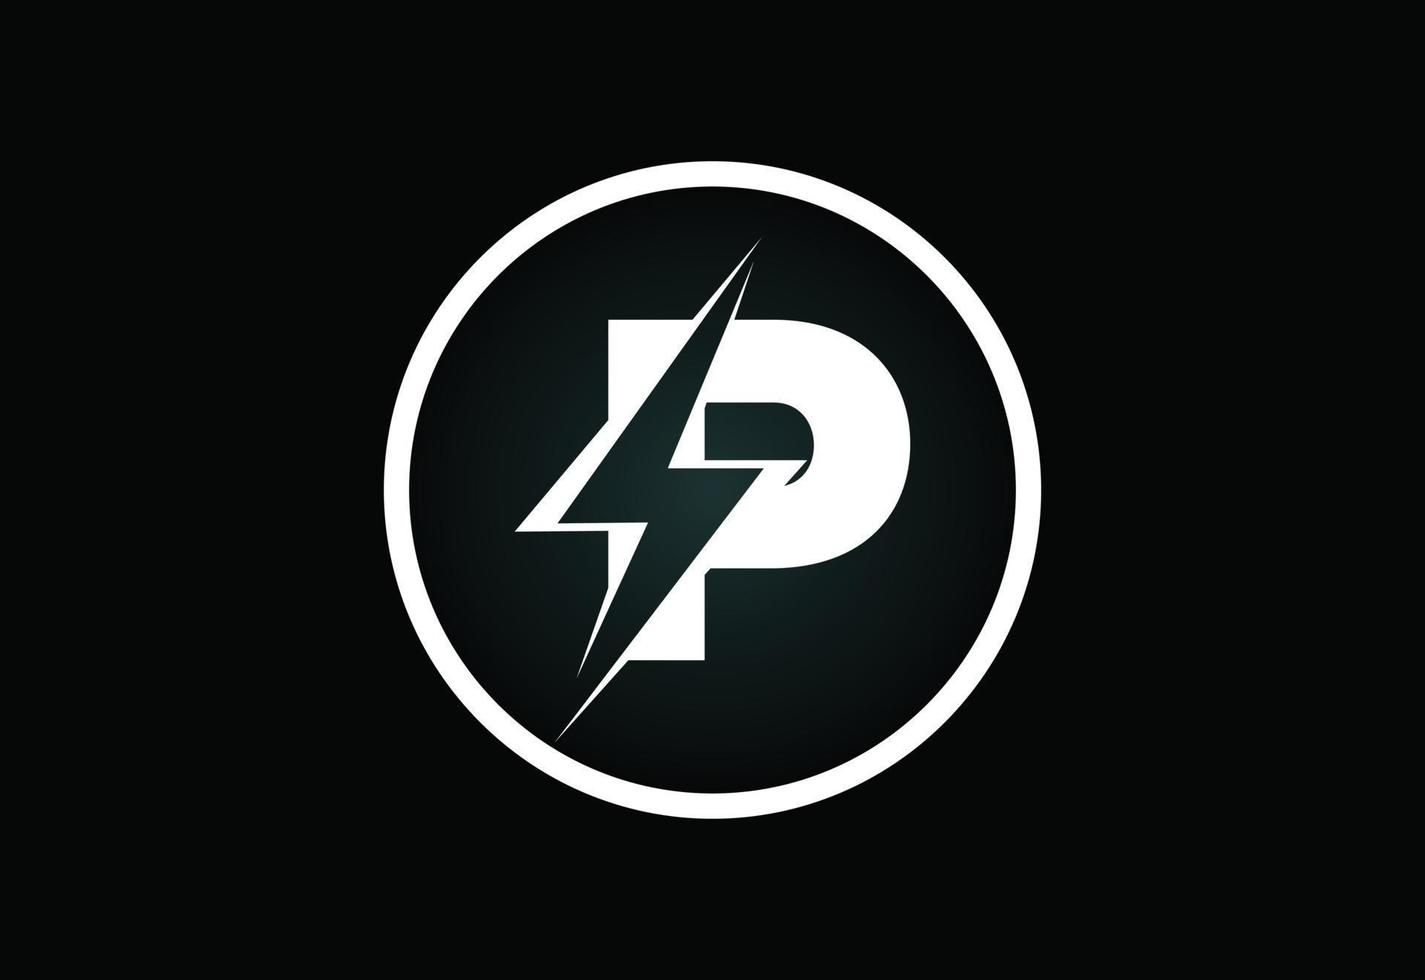 Initial P letter logo design with lighting thunder bolt. Electric bolt letter logo vector